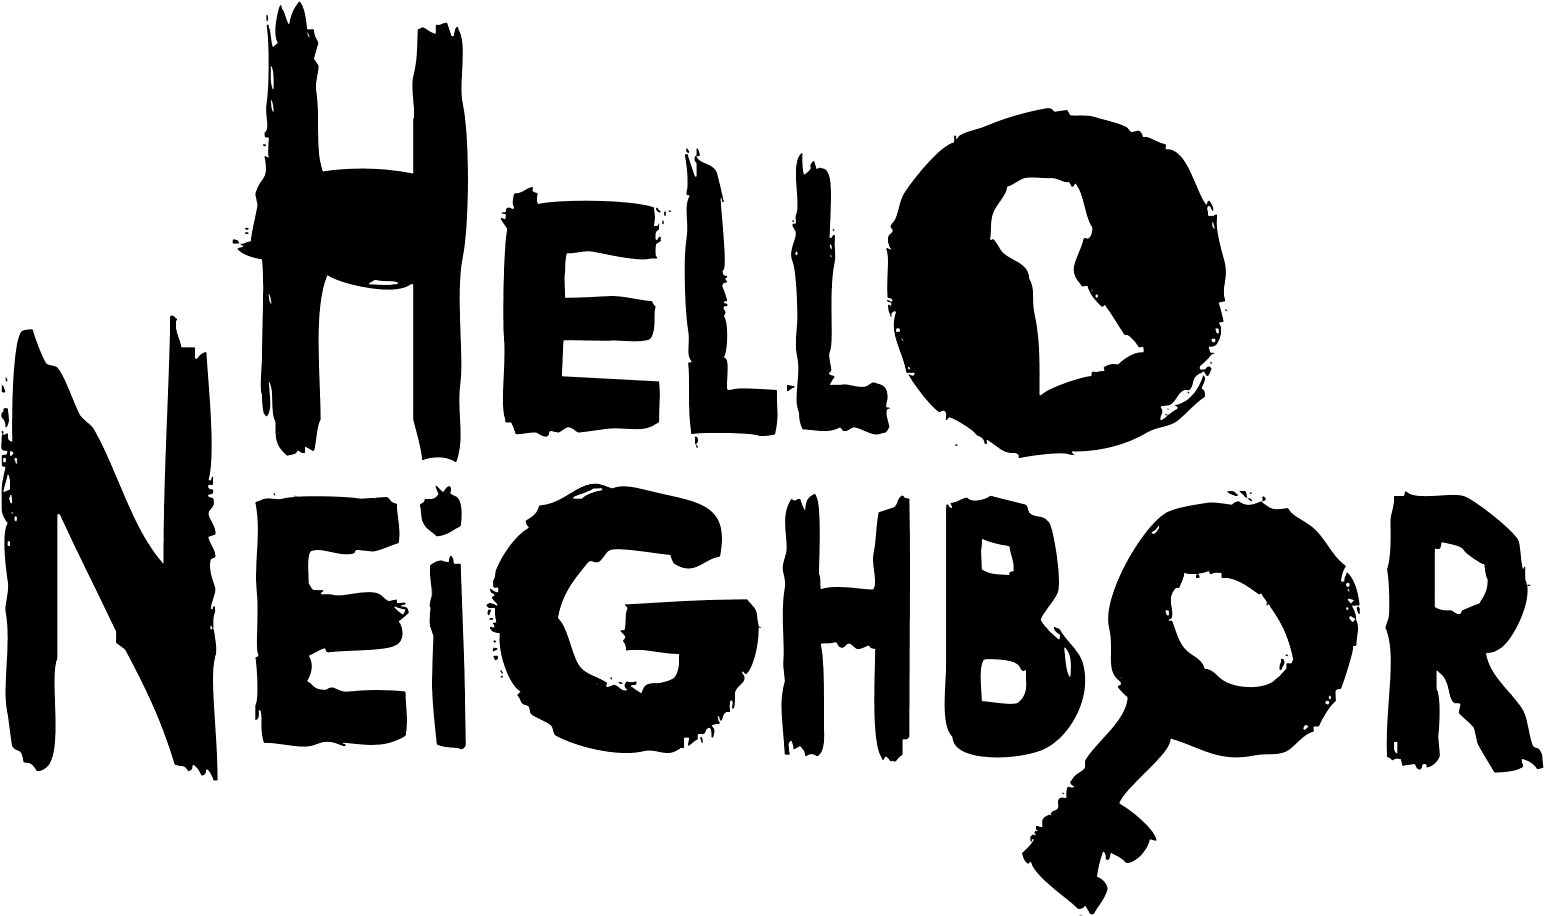 Hello Neighbor 2 лого. Привет сосед значок. Привет сосед надпись. Привет сосед без фона. Хеллоу найти